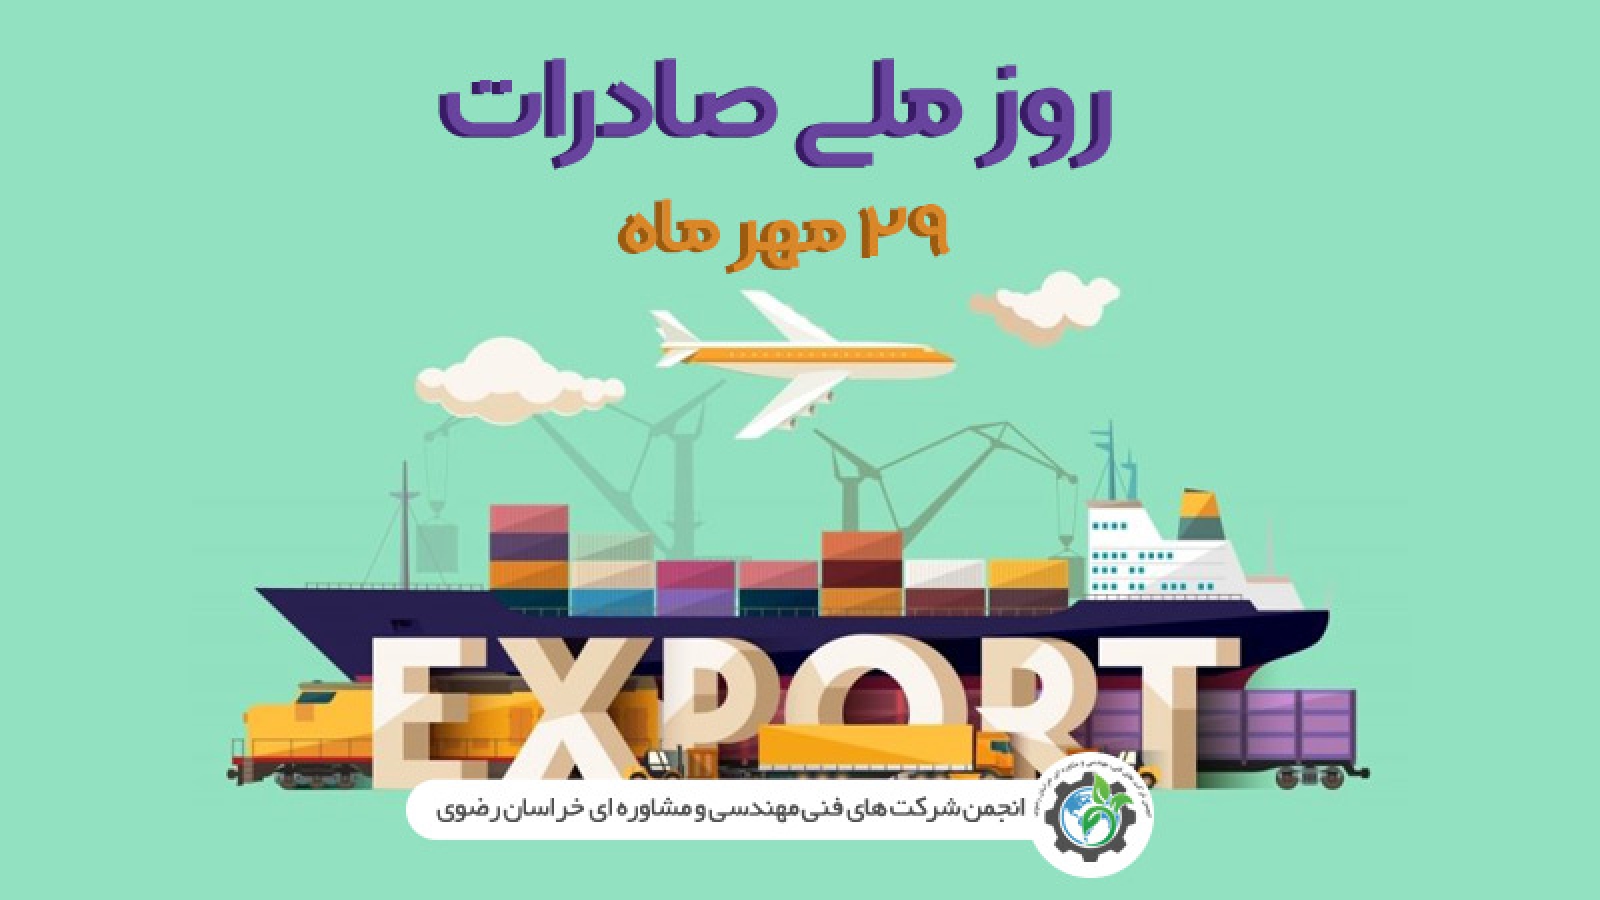 Exportsday